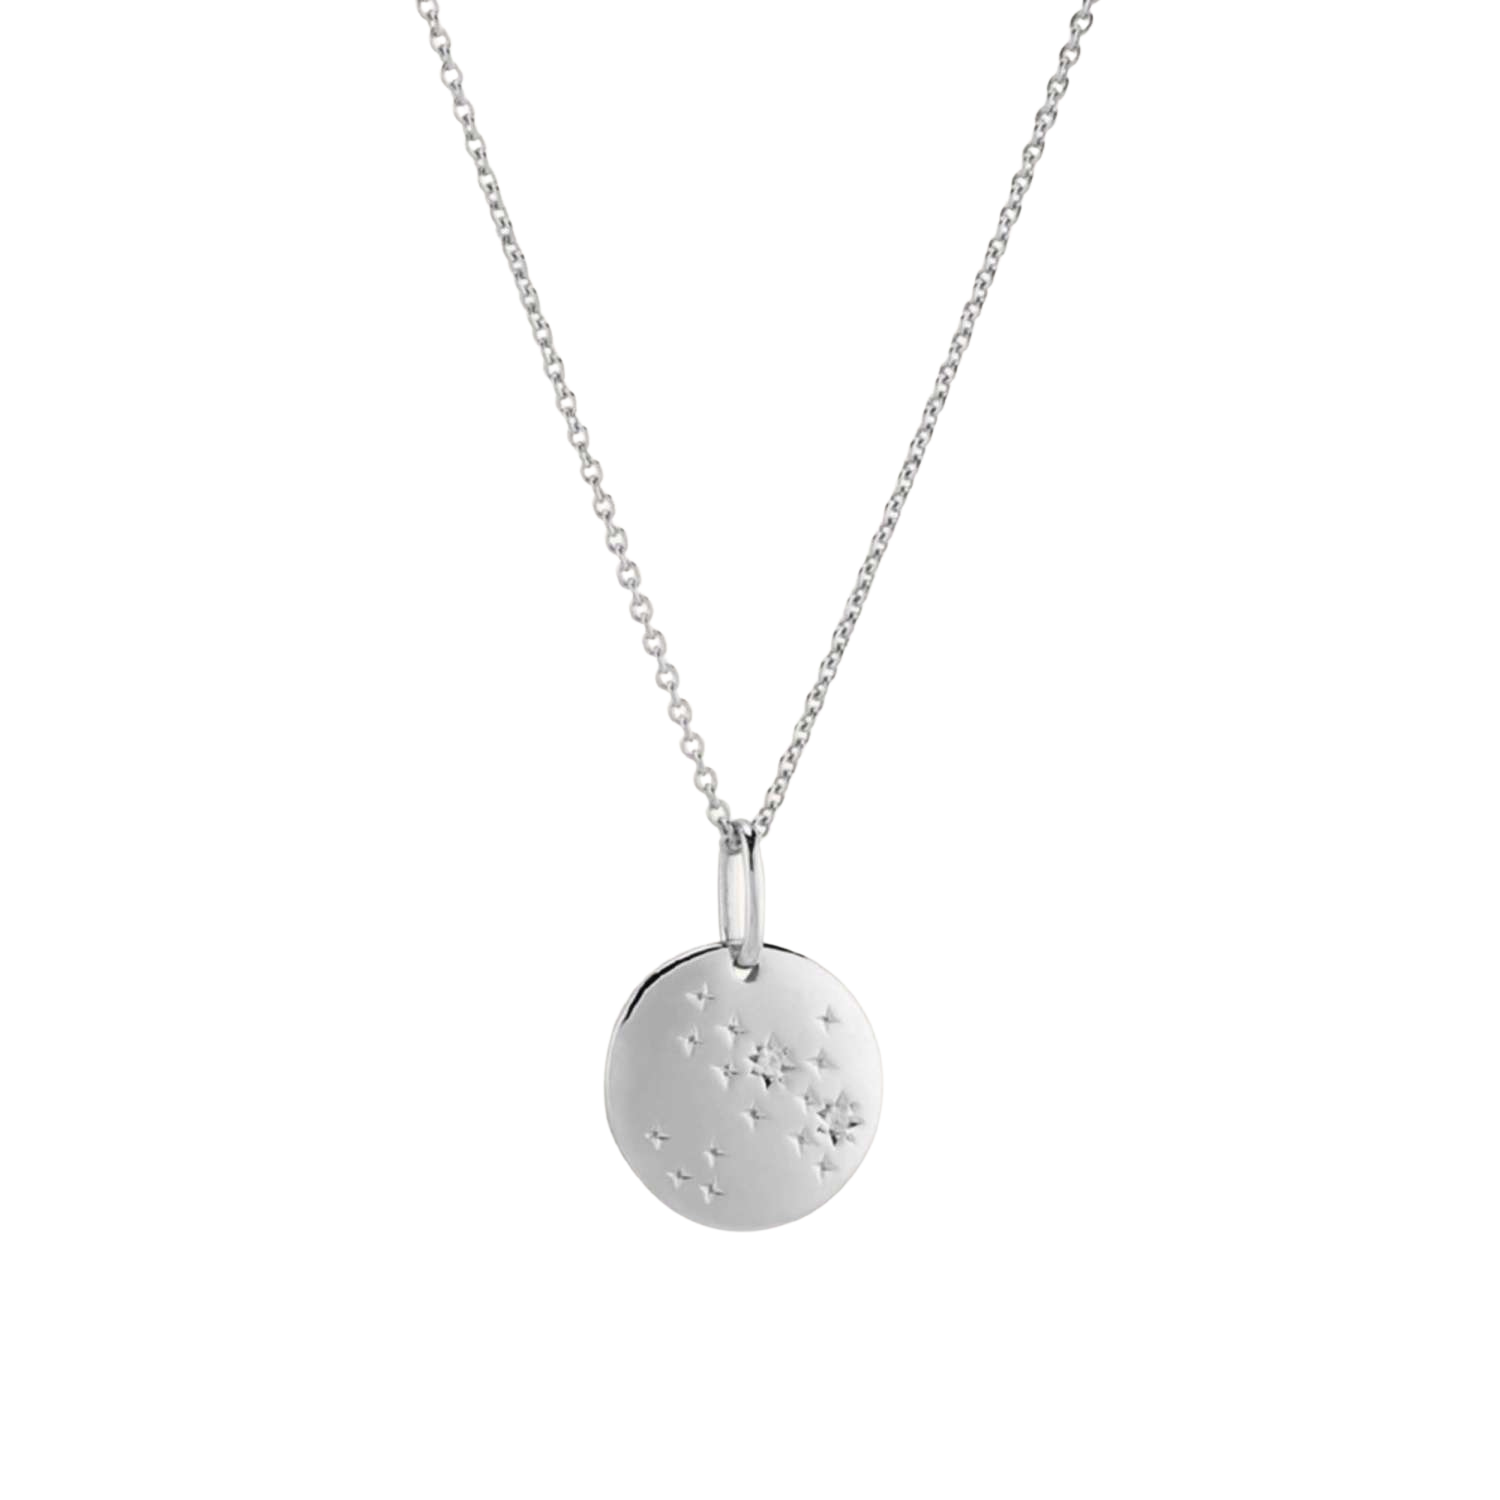 Mejuri Sagittarius Silver Necklace, $75 at Mejuri